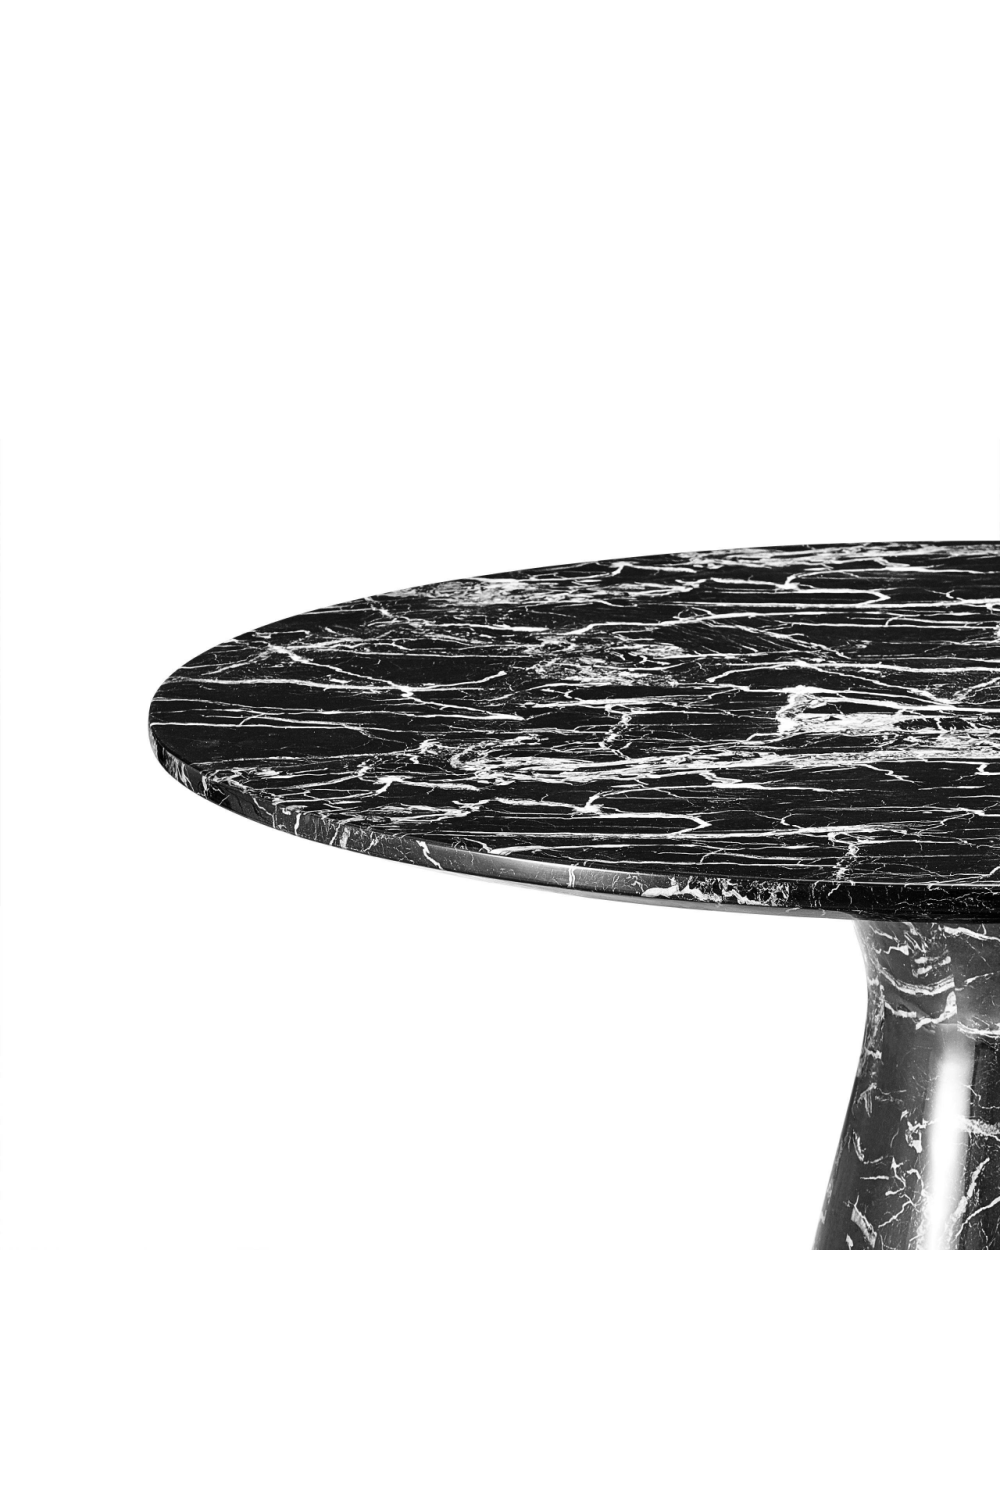 Round Marble Dining Table | Eichholtz Turner | OROA